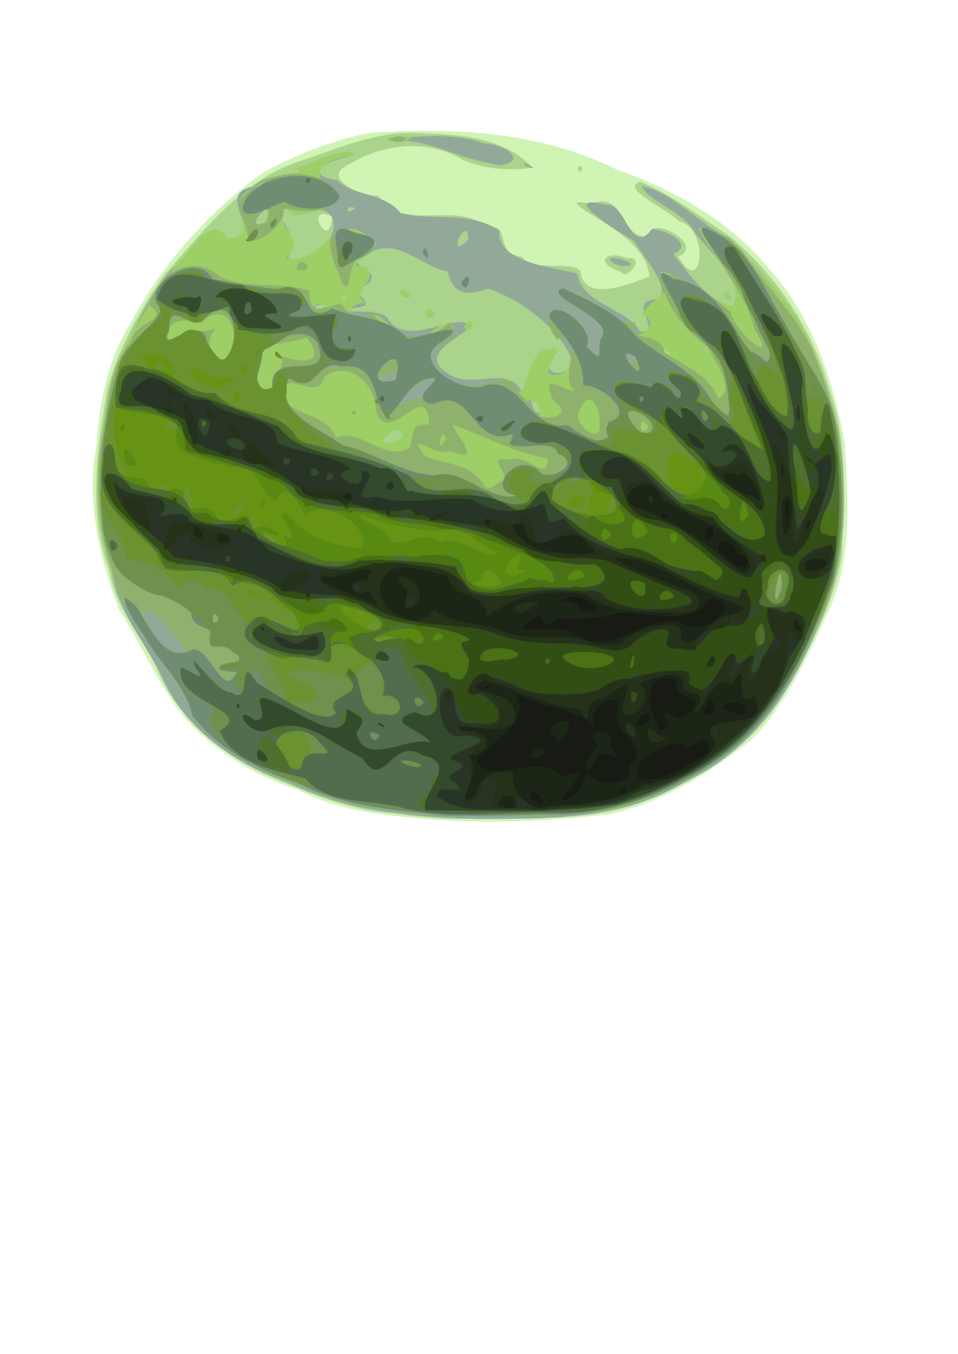 Watermelon clipart small watermelon. Free stock photo illustration